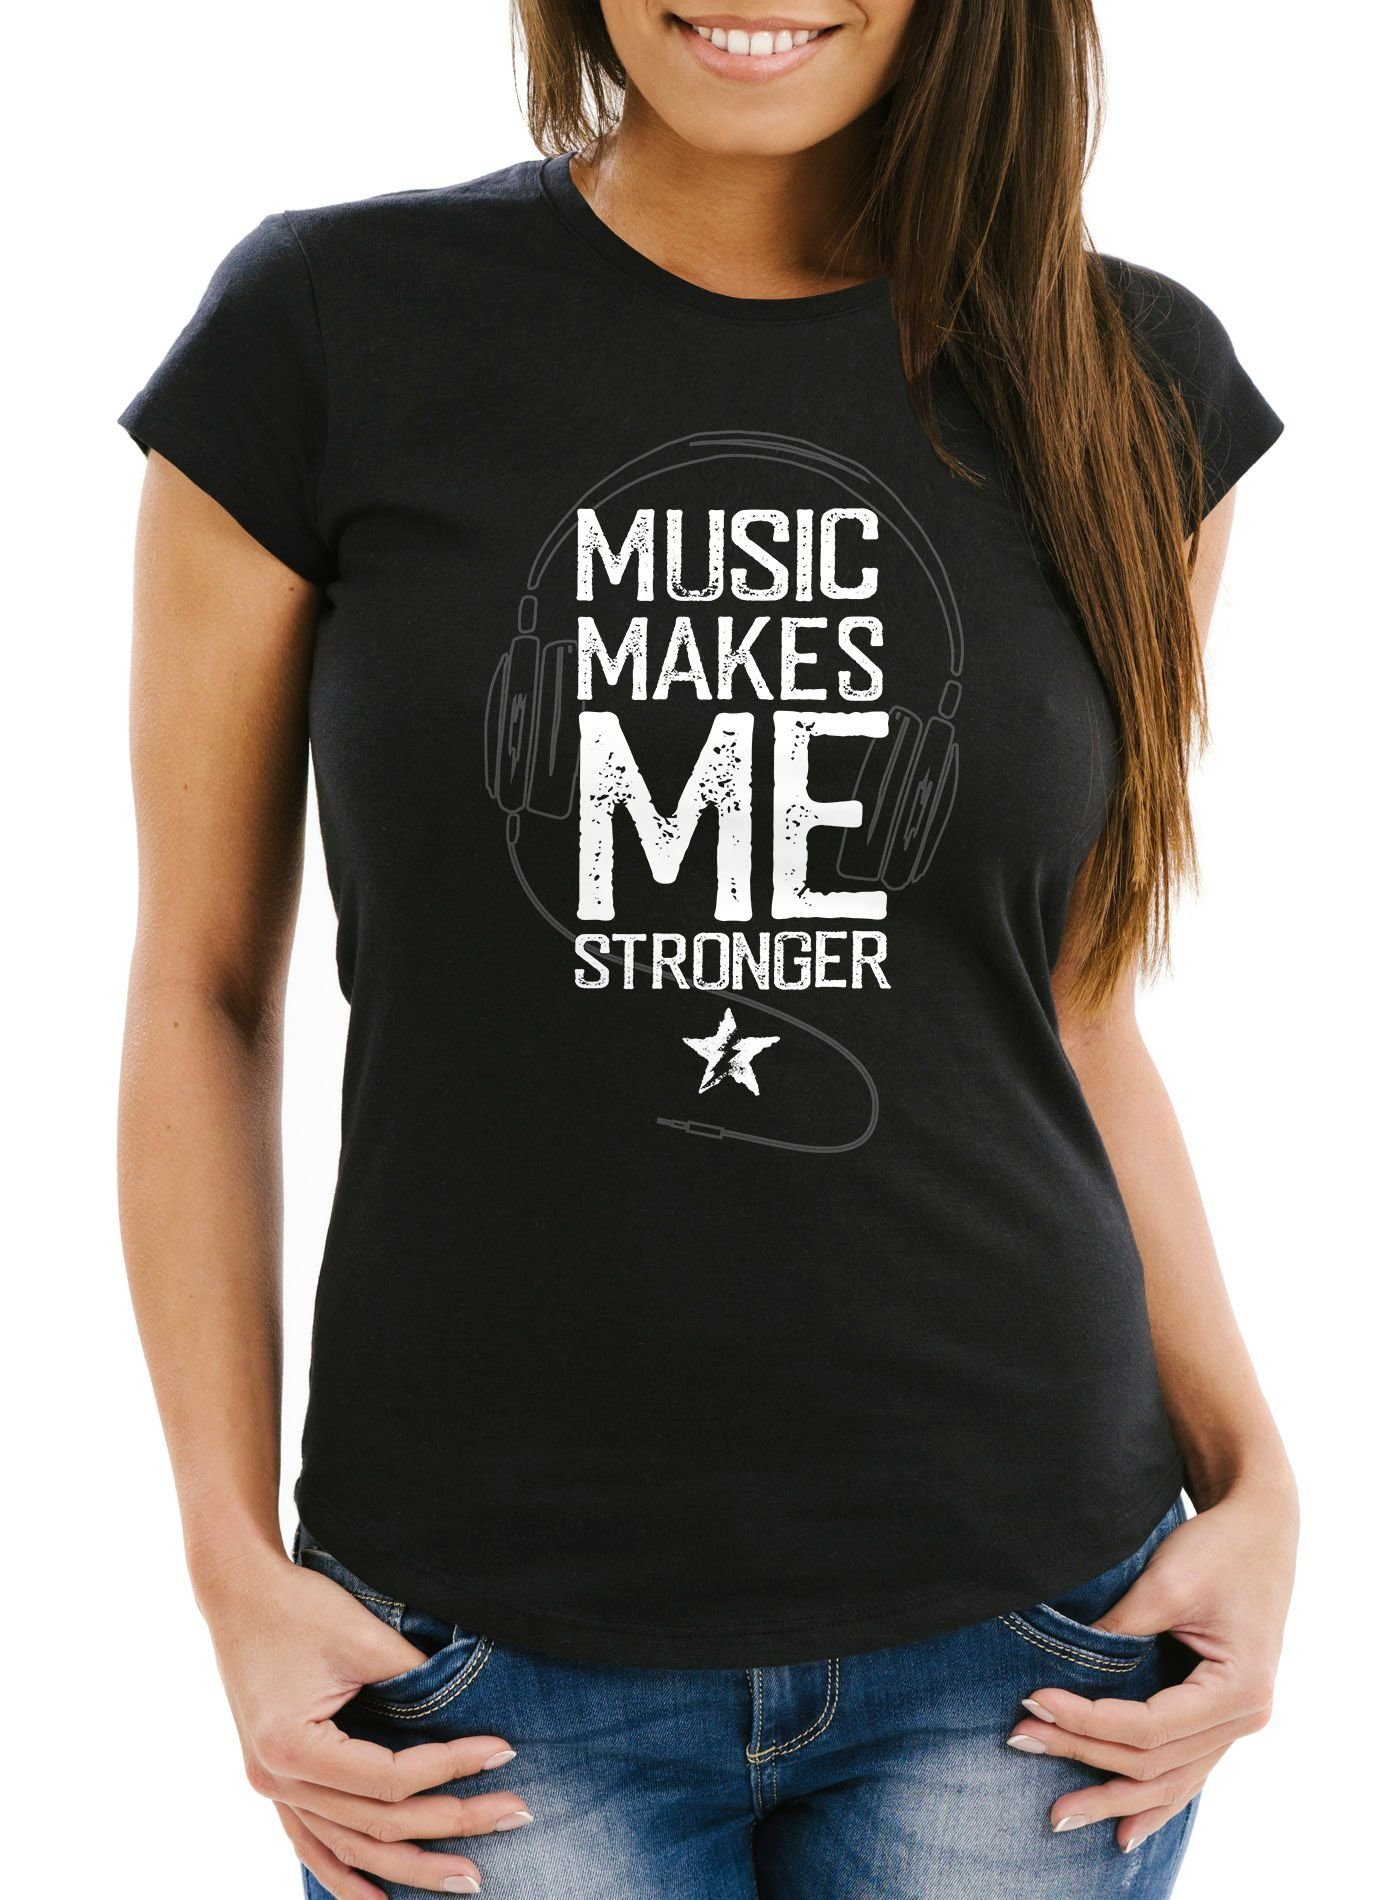 Damen Fit me Slim Neverless® Neverless Stronger Statement Spruch Print mit makes Print-Shirt Music T-Shirt